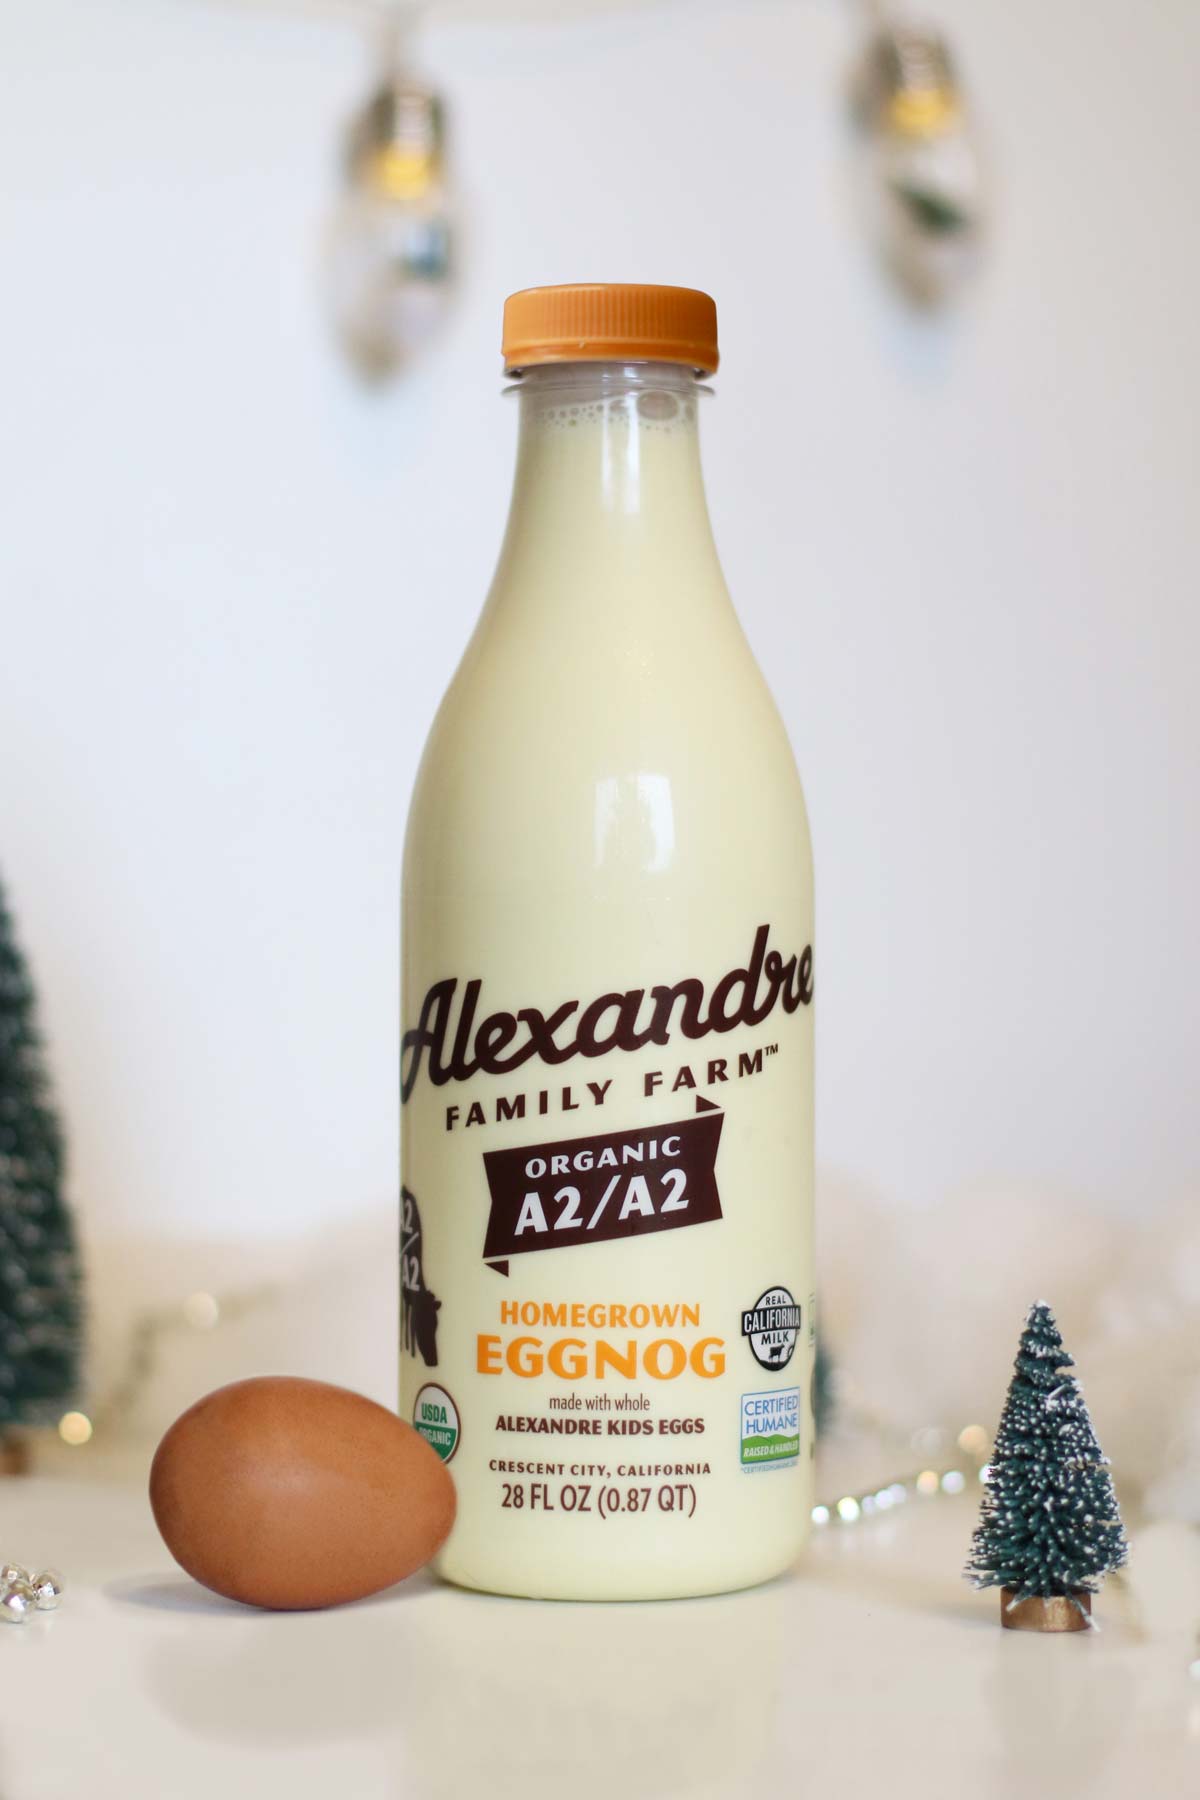 Alexandre Family Farm Homegrown Eggnog